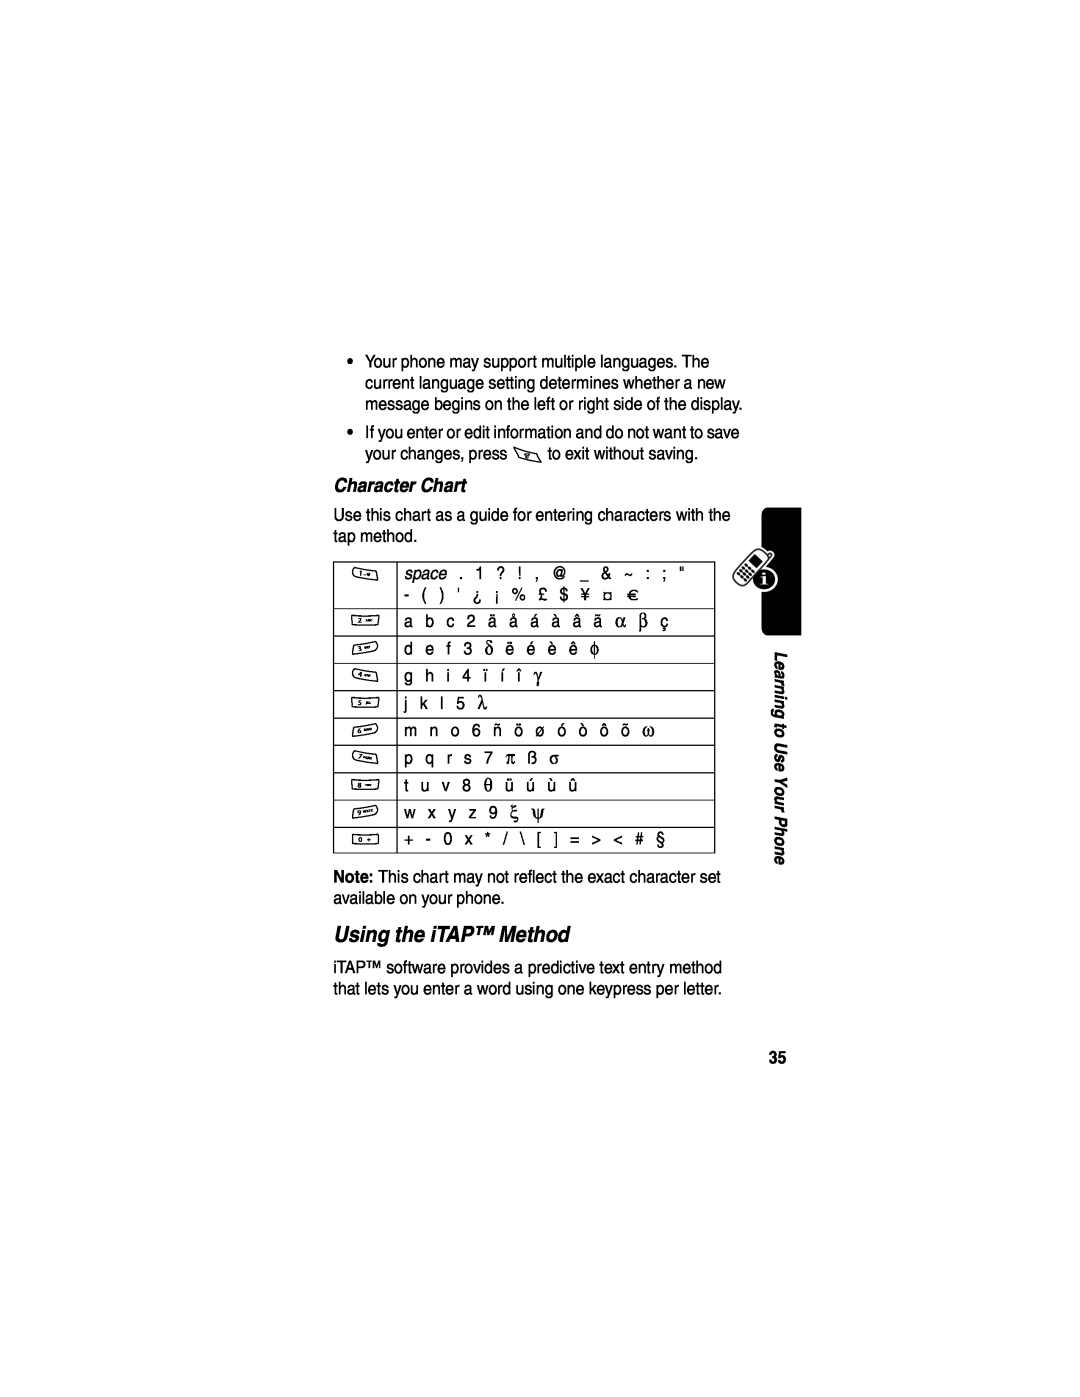 Motorola WIRELESS TELEPHONE manual Using the iTAP Method, Character Chart 